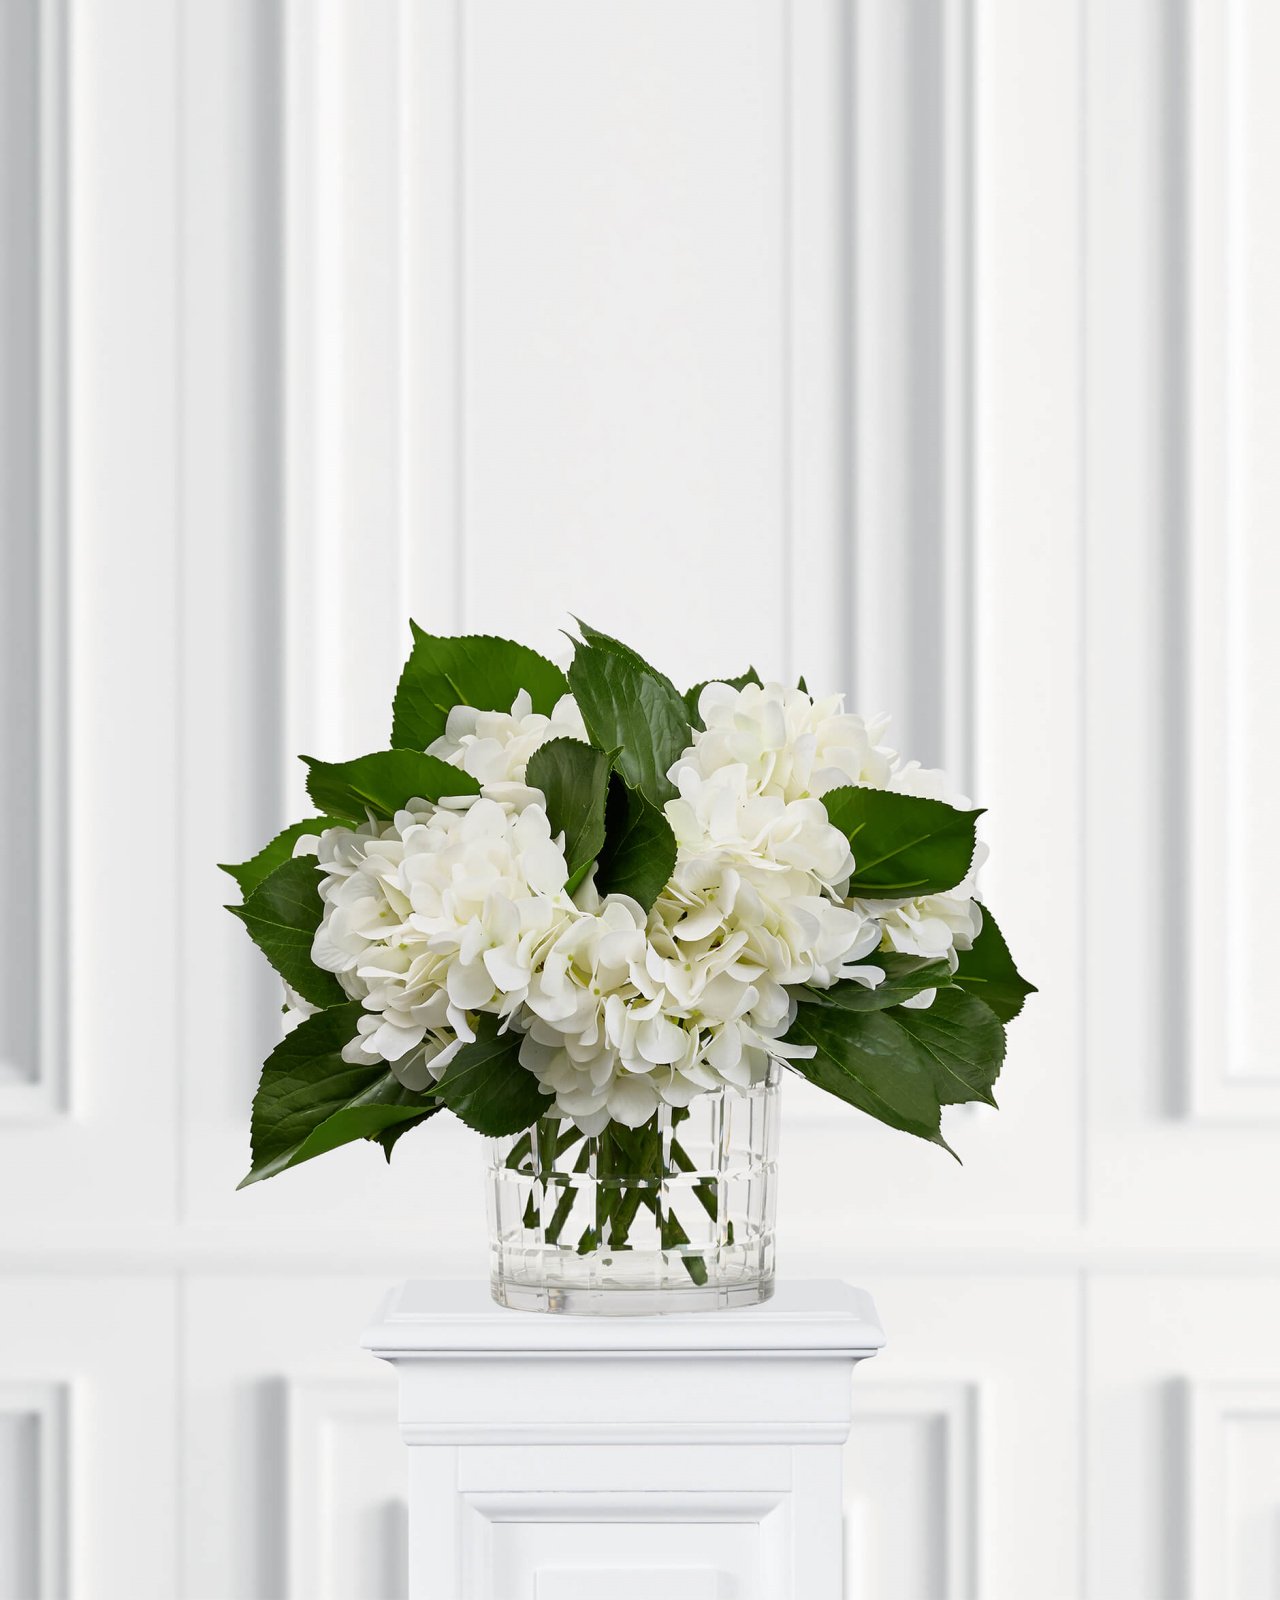 Hydrangea Cut Flower White